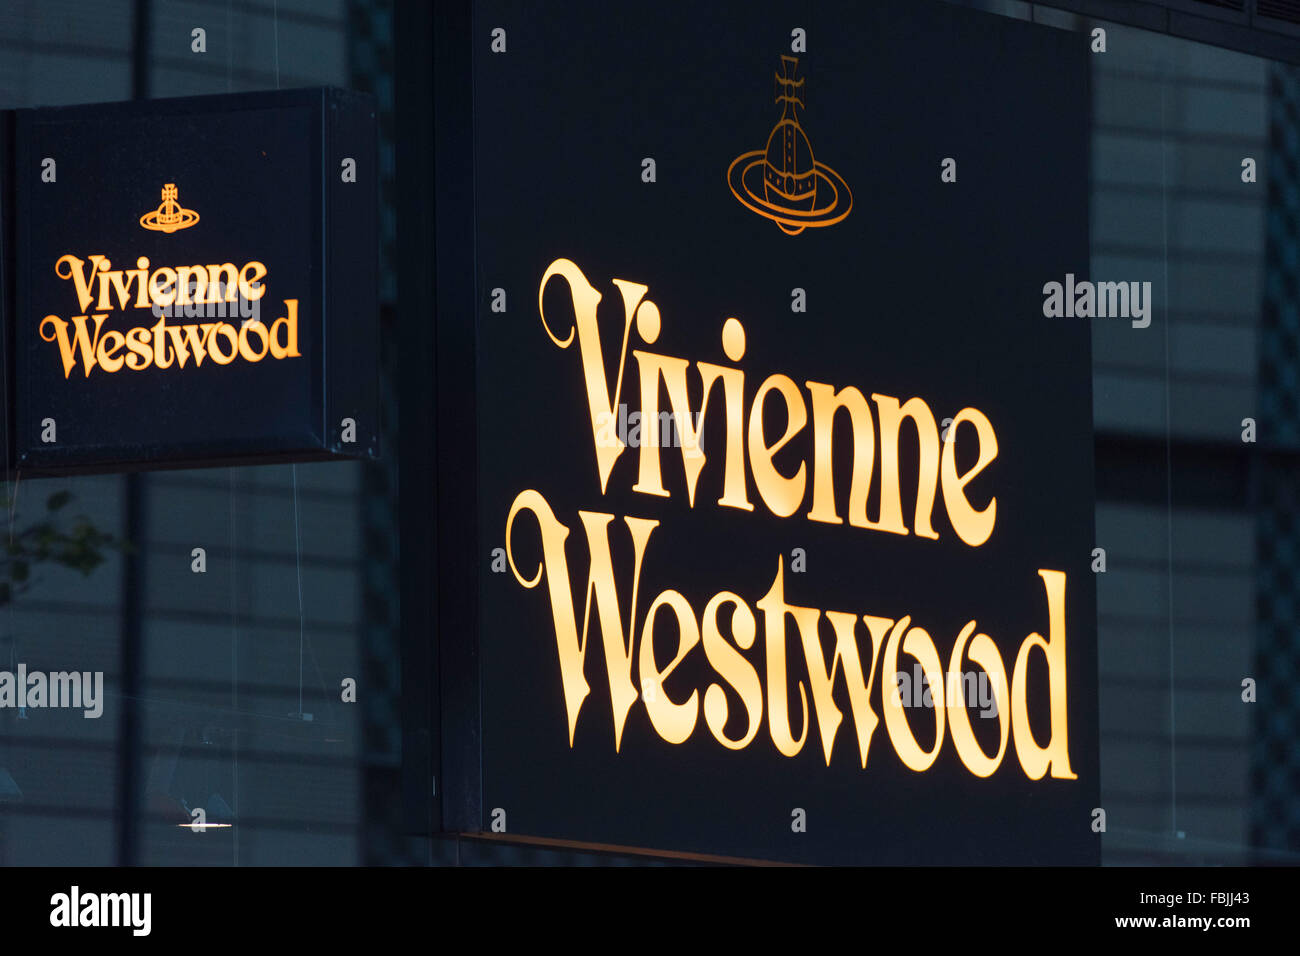 Vivienne Westwood fashion shop sign logo Stock Photo - Alamy